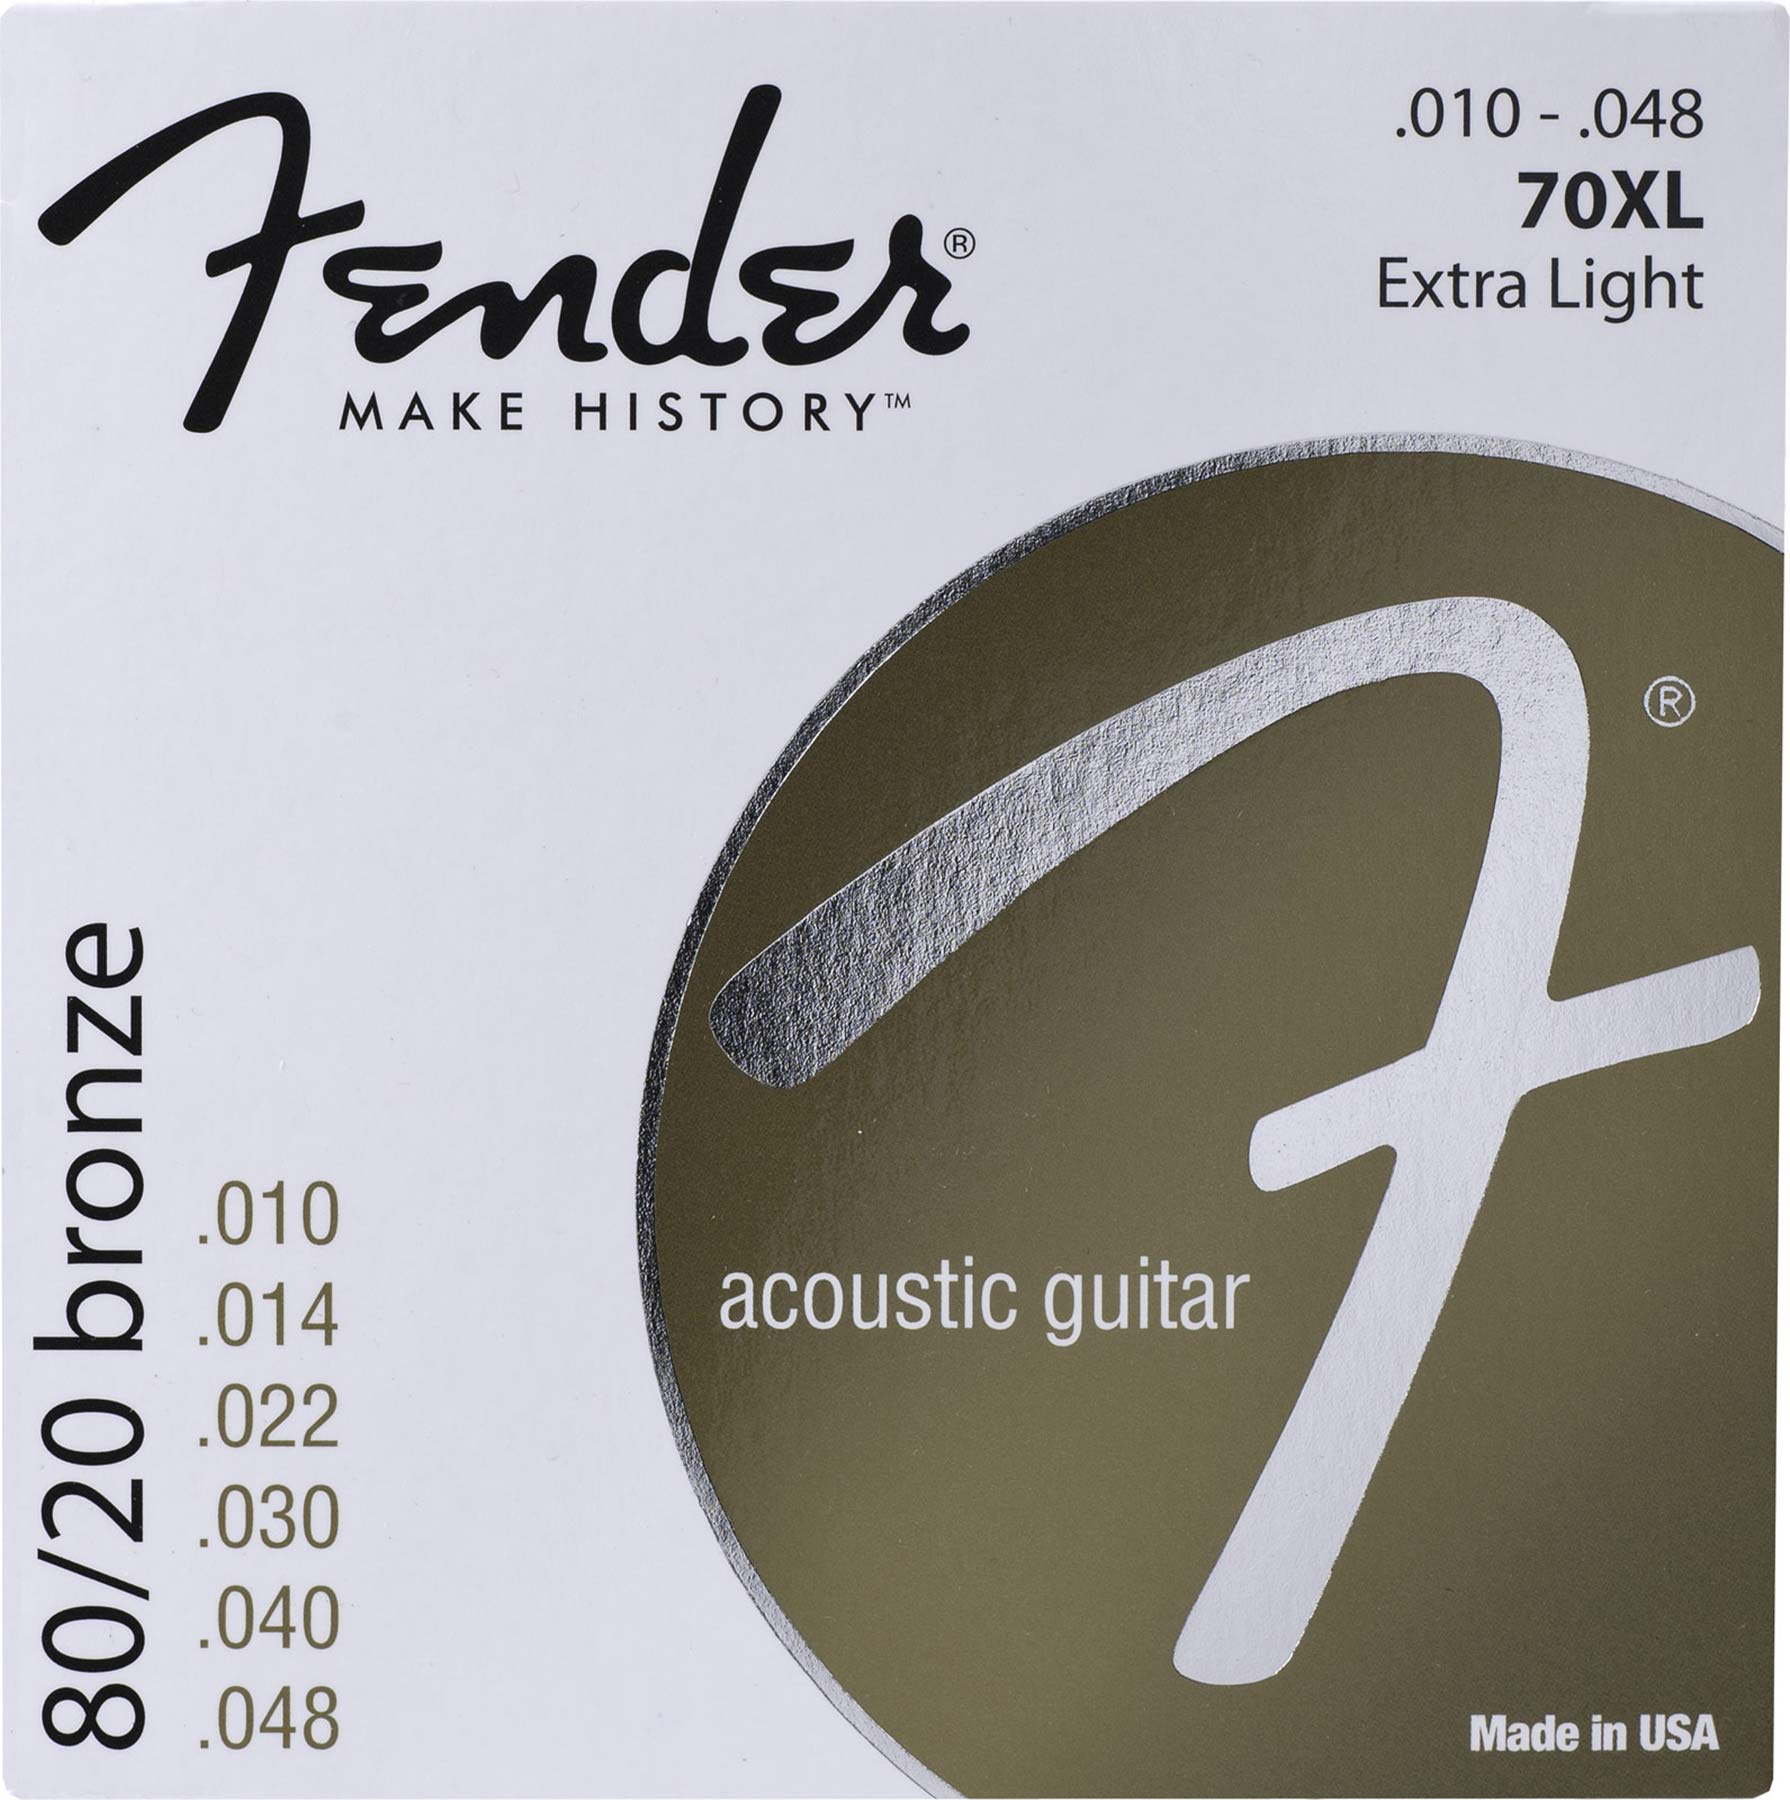 FENDER 70XL 80/20 BRONZE EXTRA LIGHT ACOUSTIC GUITAR STRINGS .010-.048